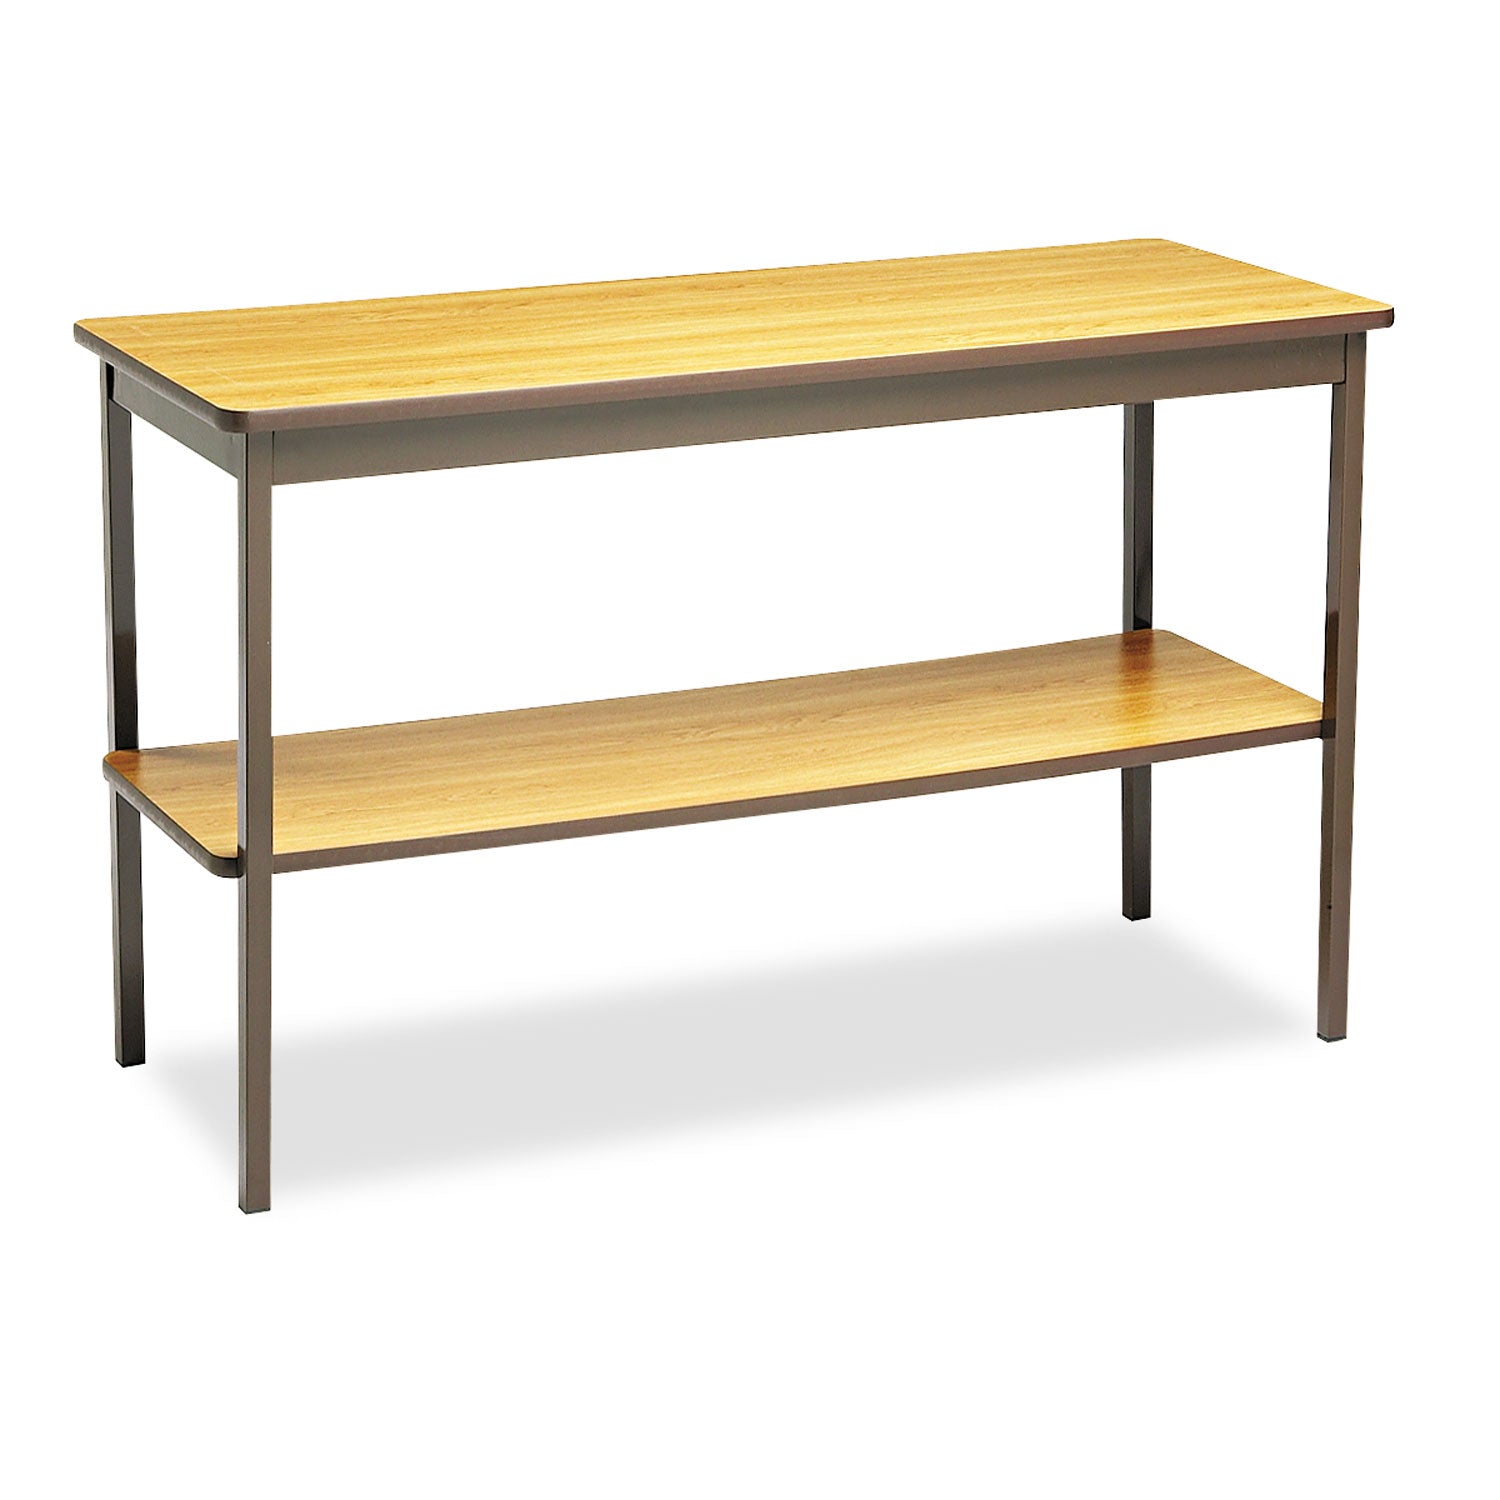 Utility Table with Bottom Shelf, Rectangular, 48w x 18d x 30h, Oak/Brown - 